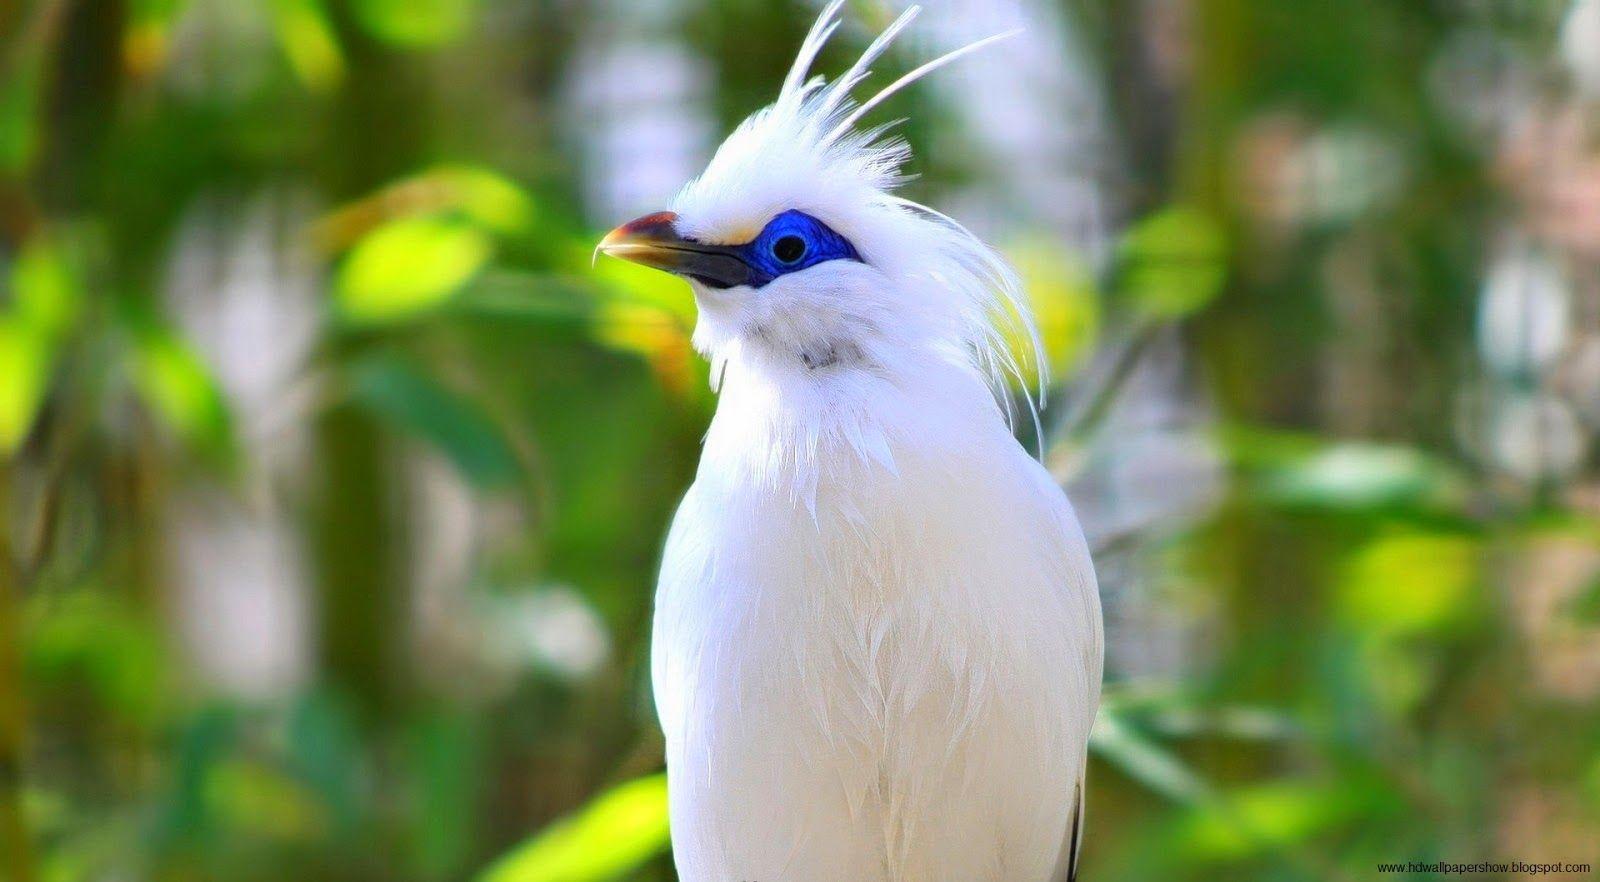 Blue White Bird Logo - HD Wallpaper : Beautiful White Bird With Blue Eyes